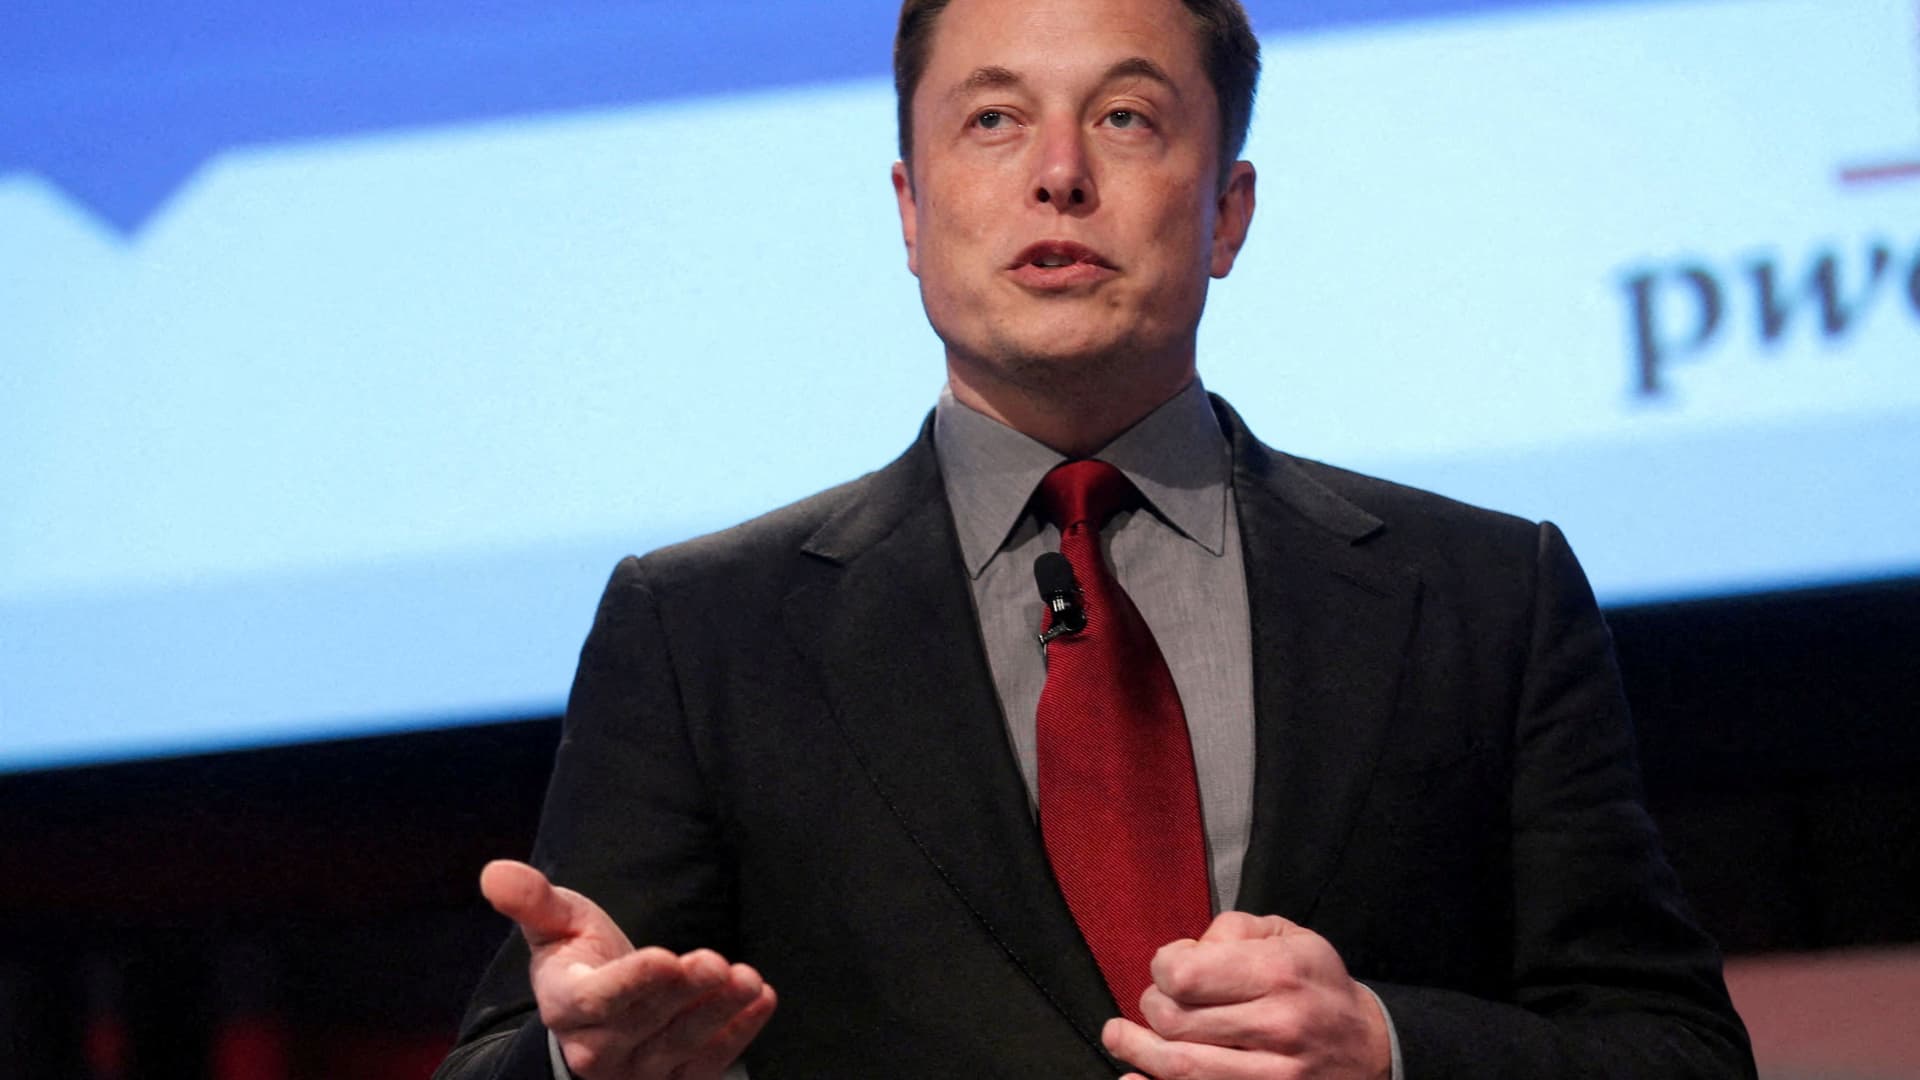 Elon Musk talks at the Automotive World News Congress at the Renaissance Center in Detroit, Michigan.